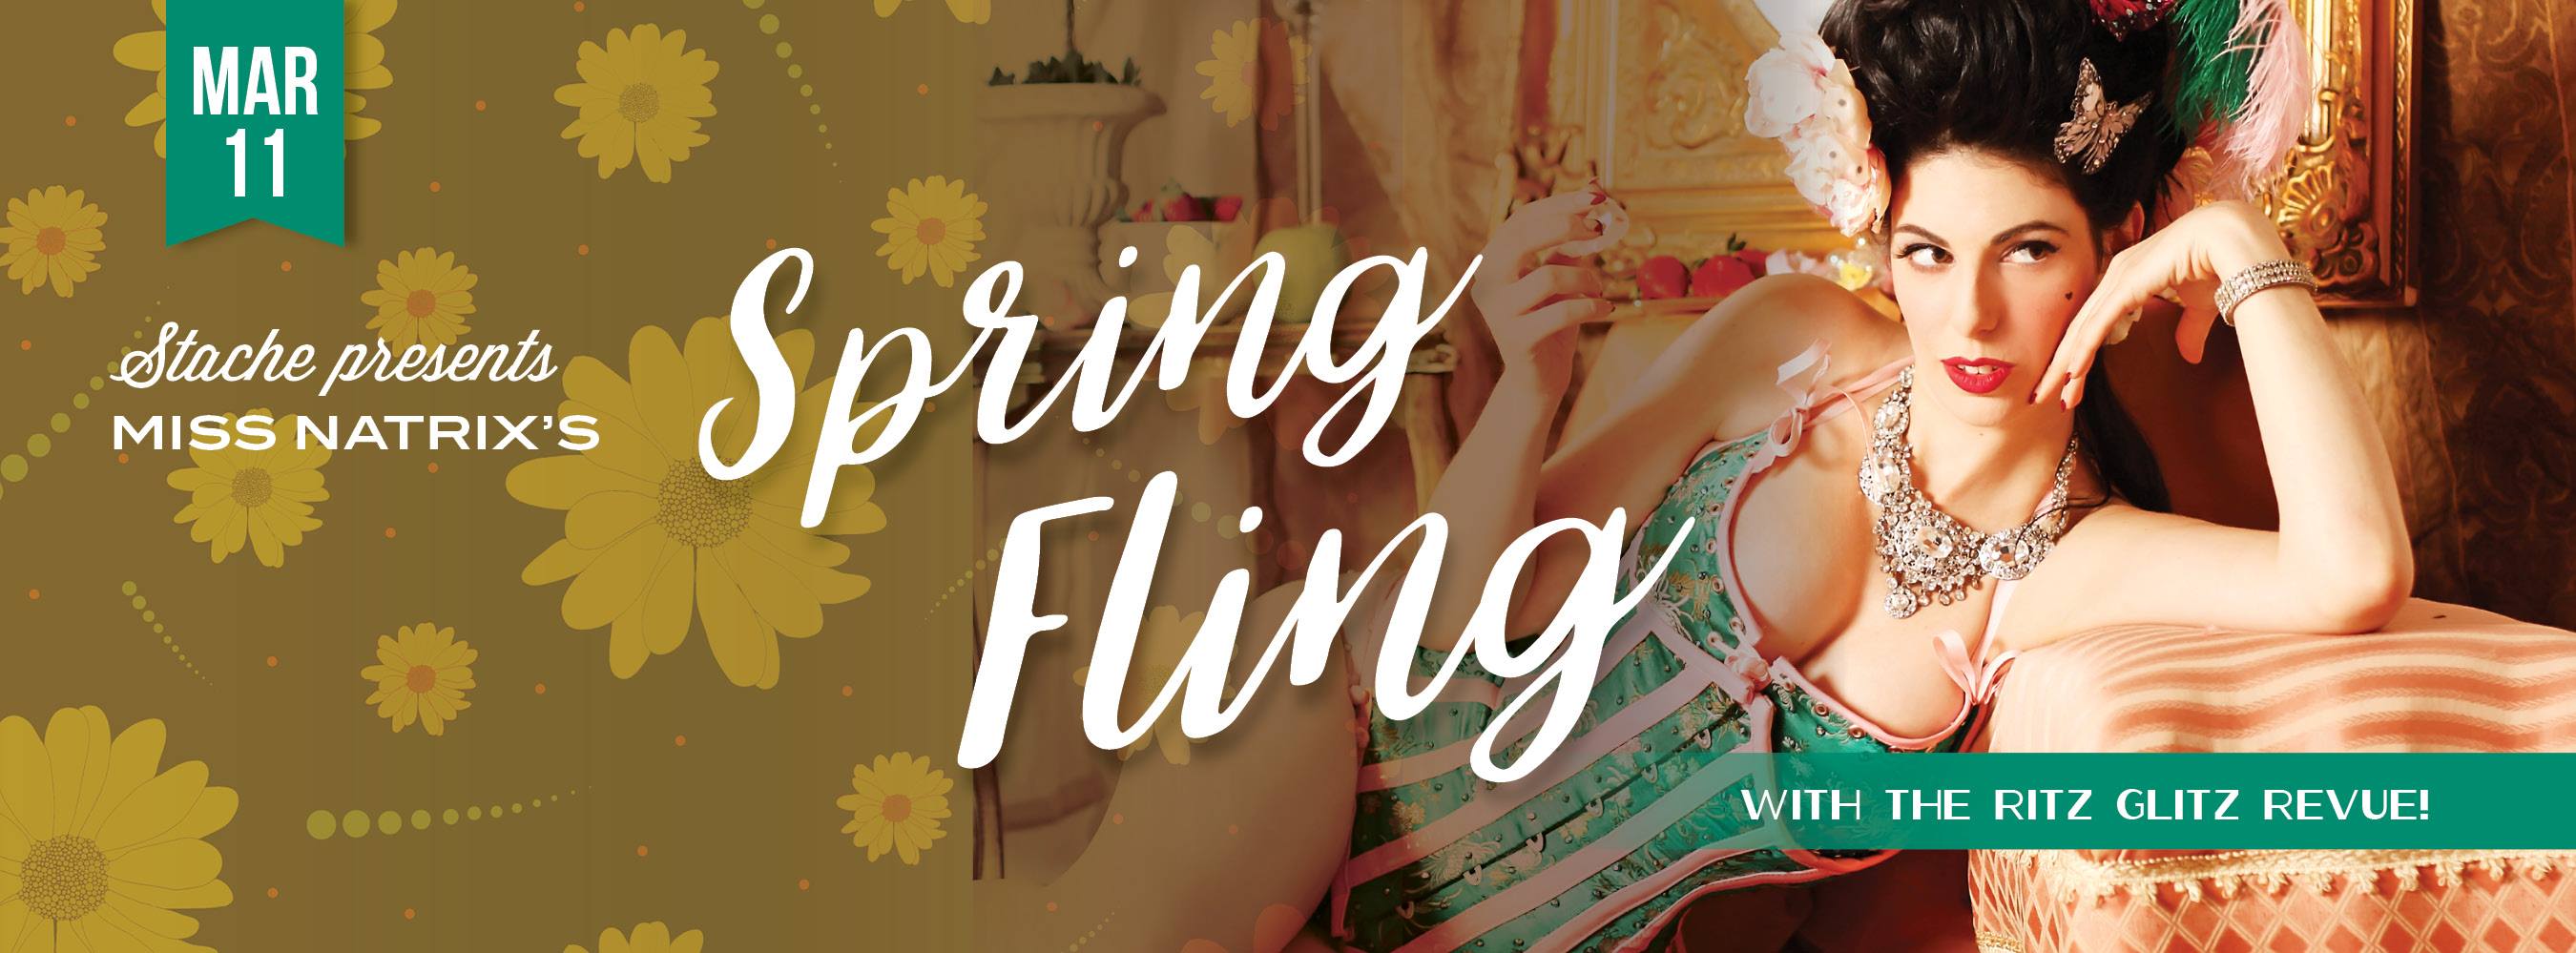 Stache + The Ritz Glitz Revue presents A Spring Fling